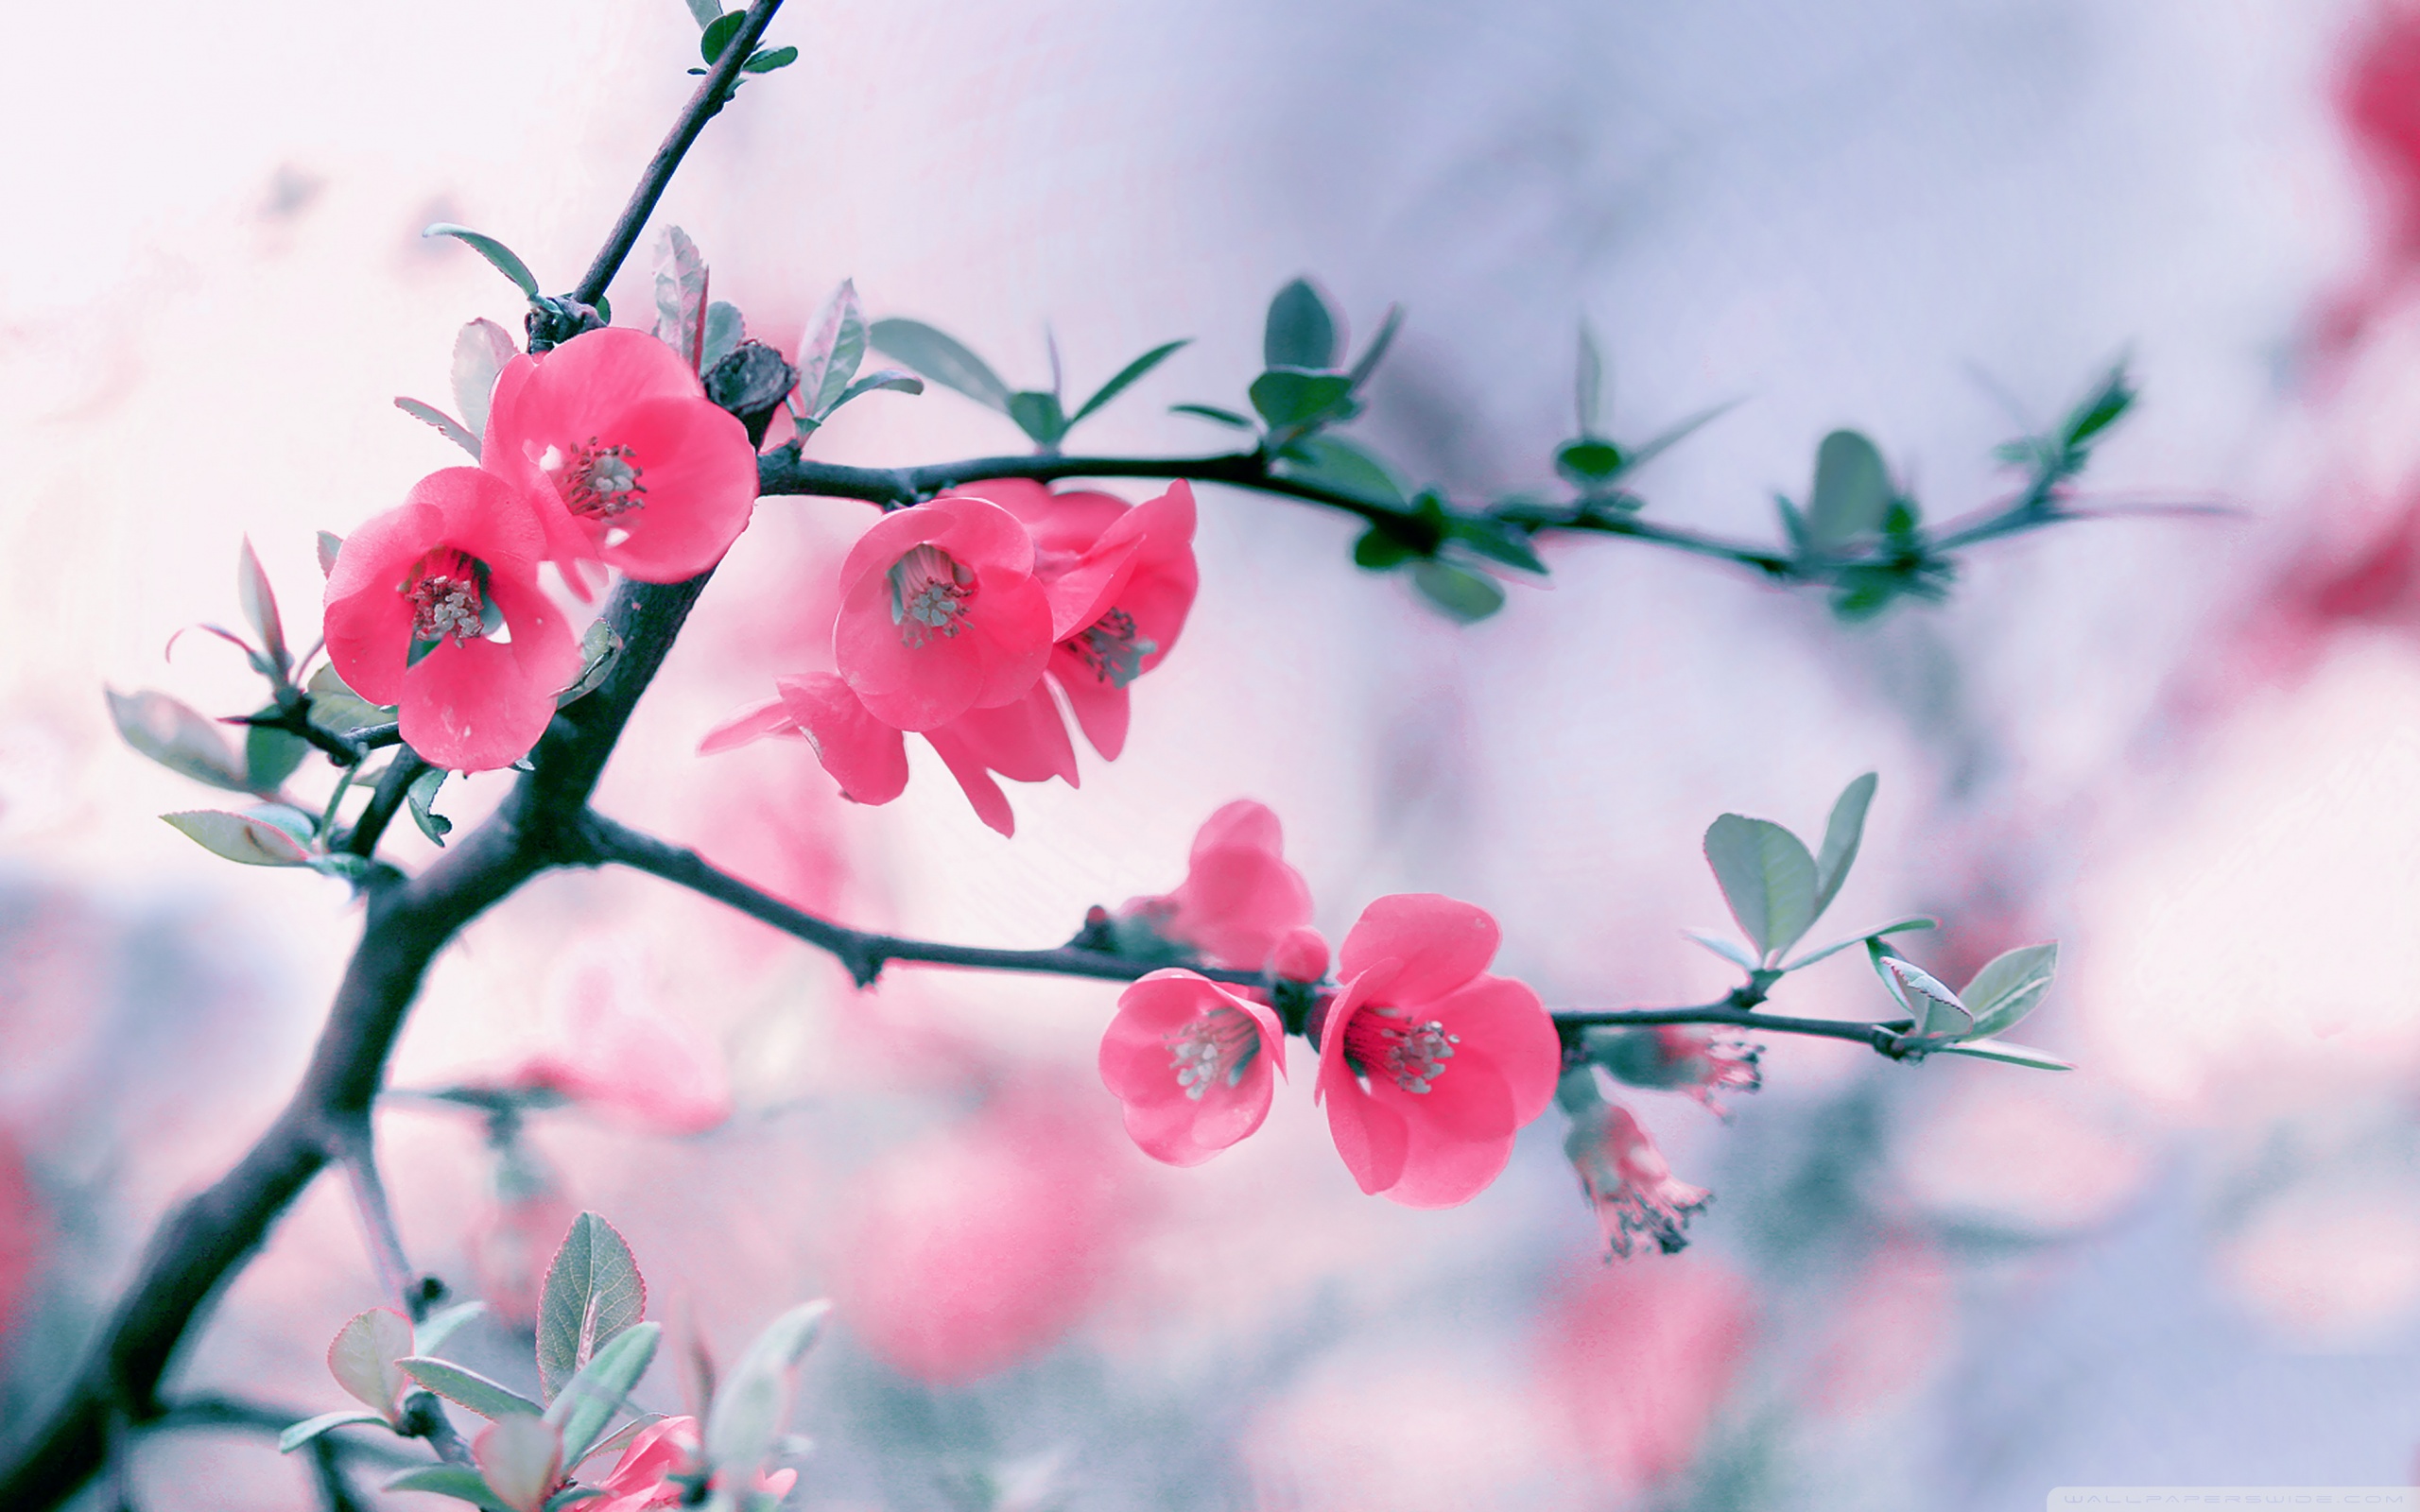 Pink Blossom Flowers, Spring Ultra HD Desktop Background Wallpaper for 4K UHD TV, Widescreen & UltraWide Desktop & Laptop, Multi Display, Dual Monitor, Tablet